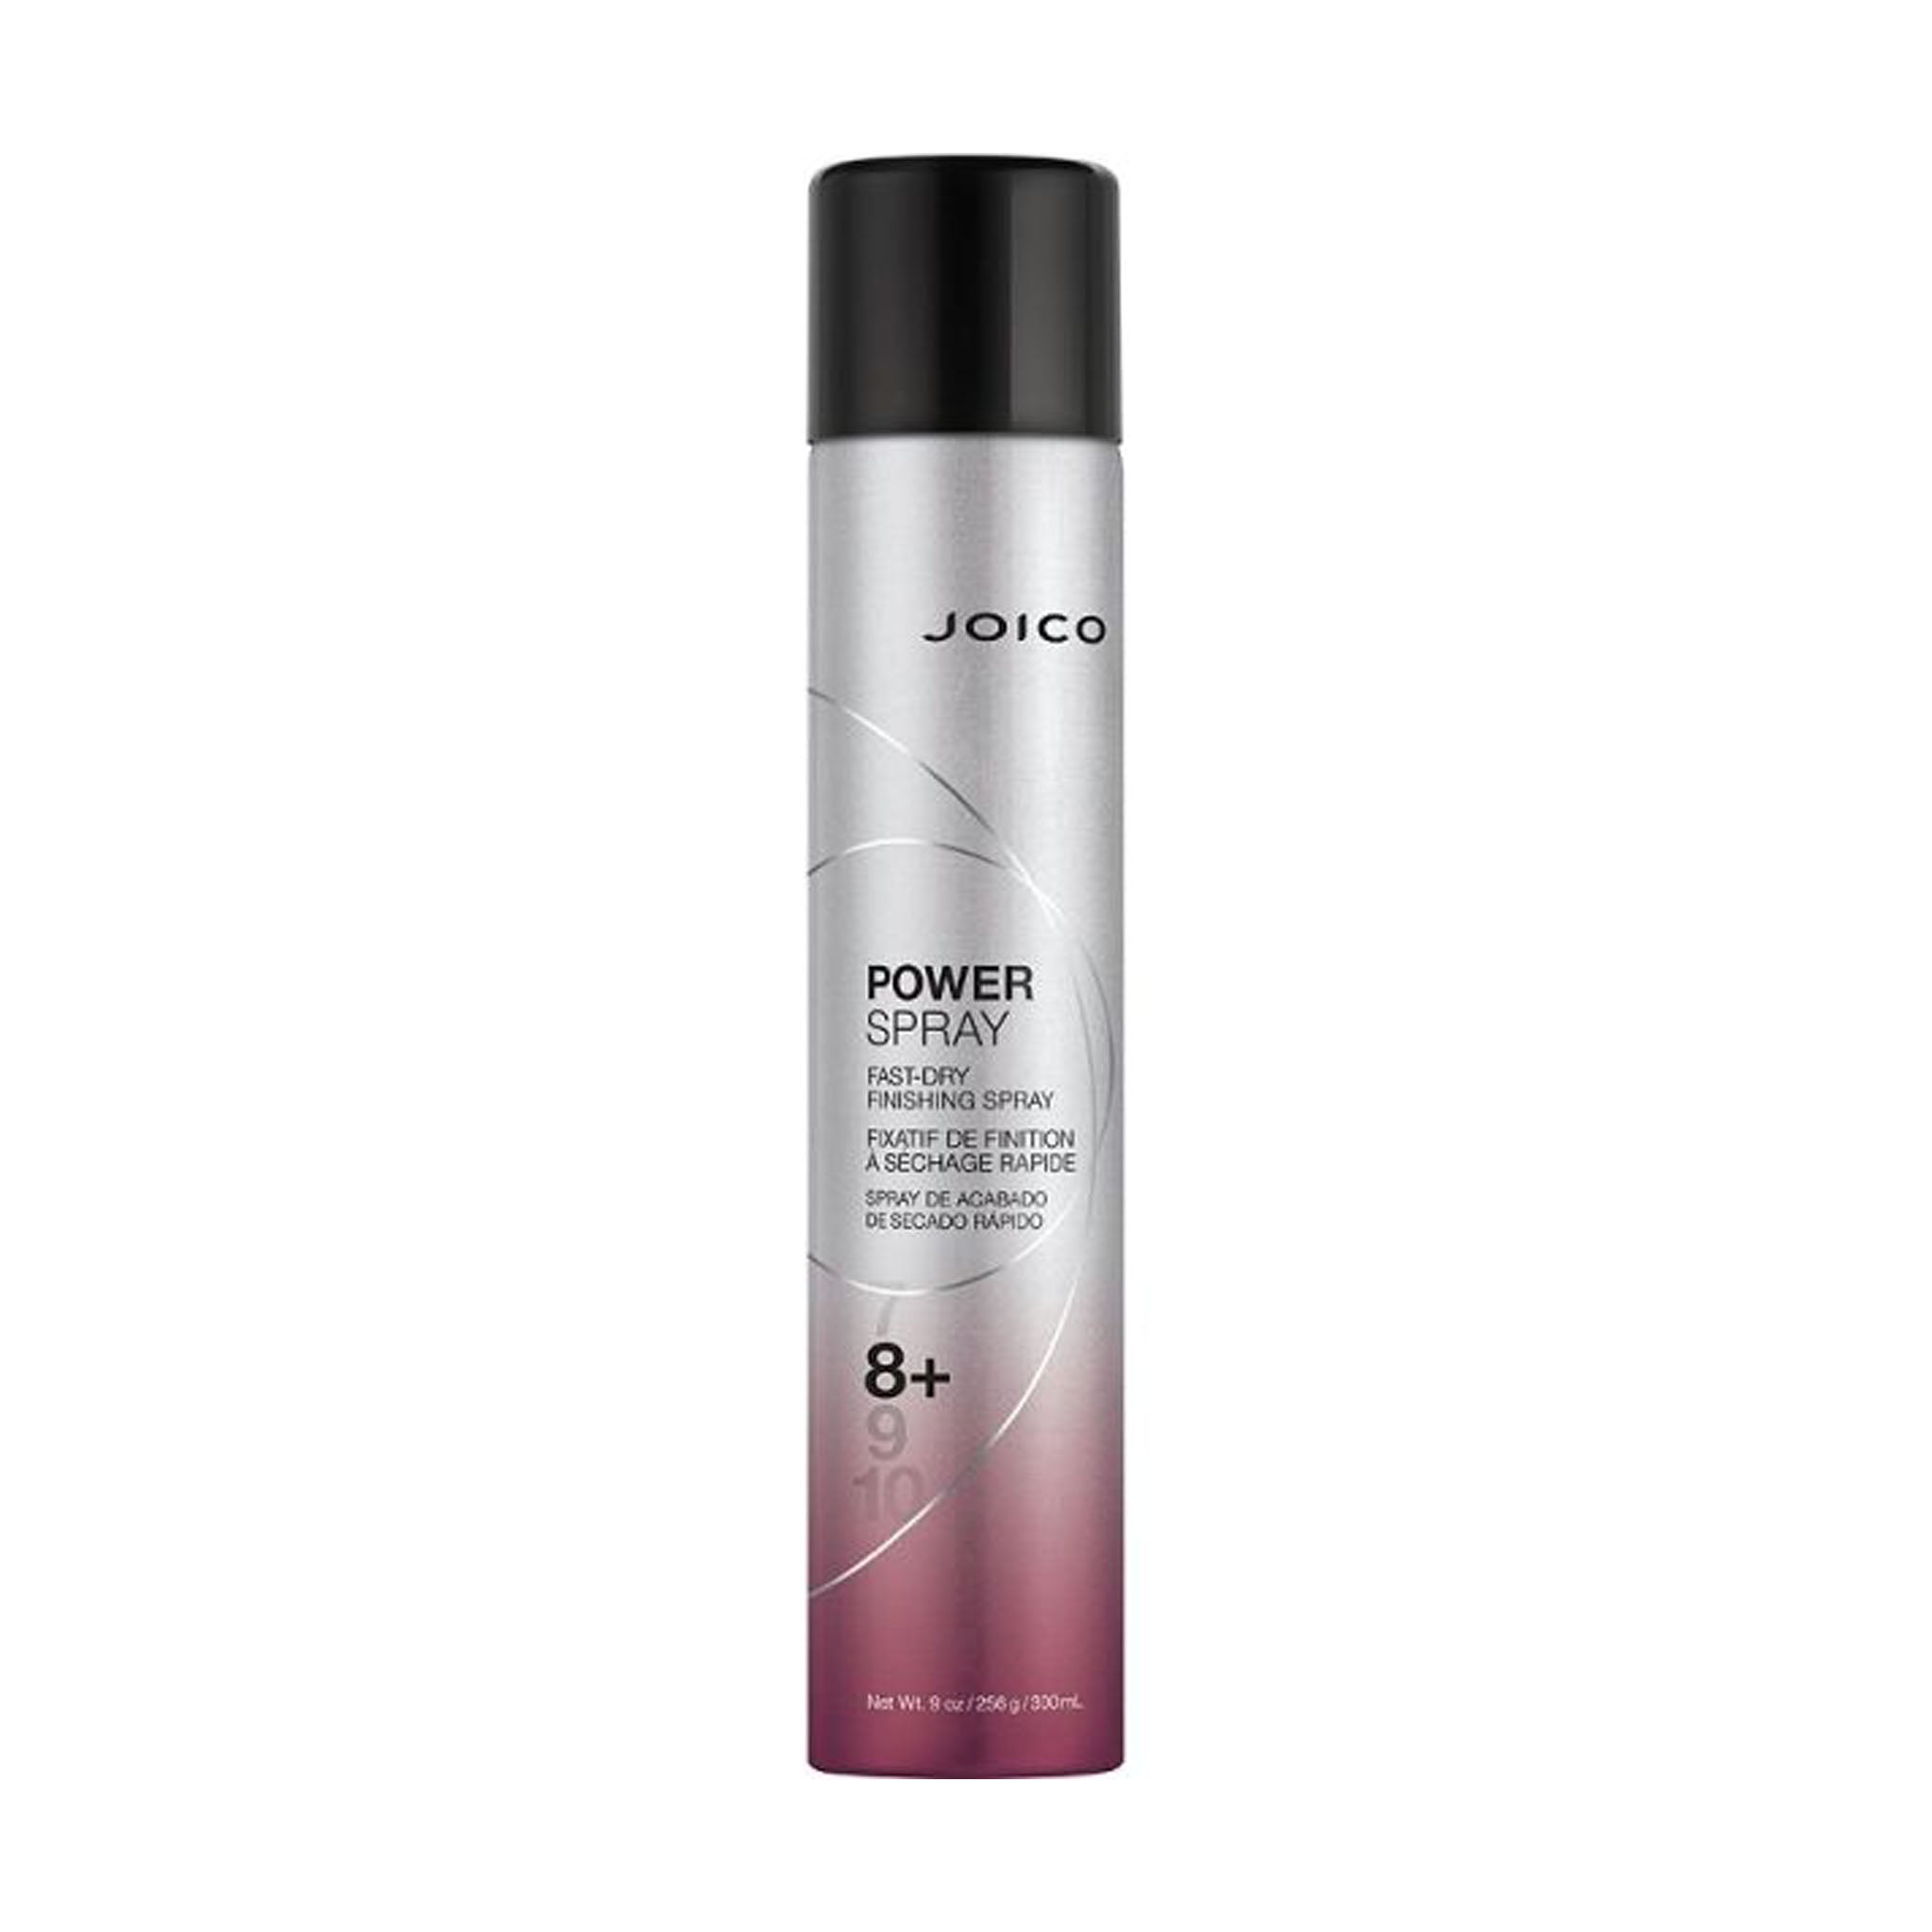 Joico. Spray Power Tenue 8+ - 300 ml - Concept C. Shop